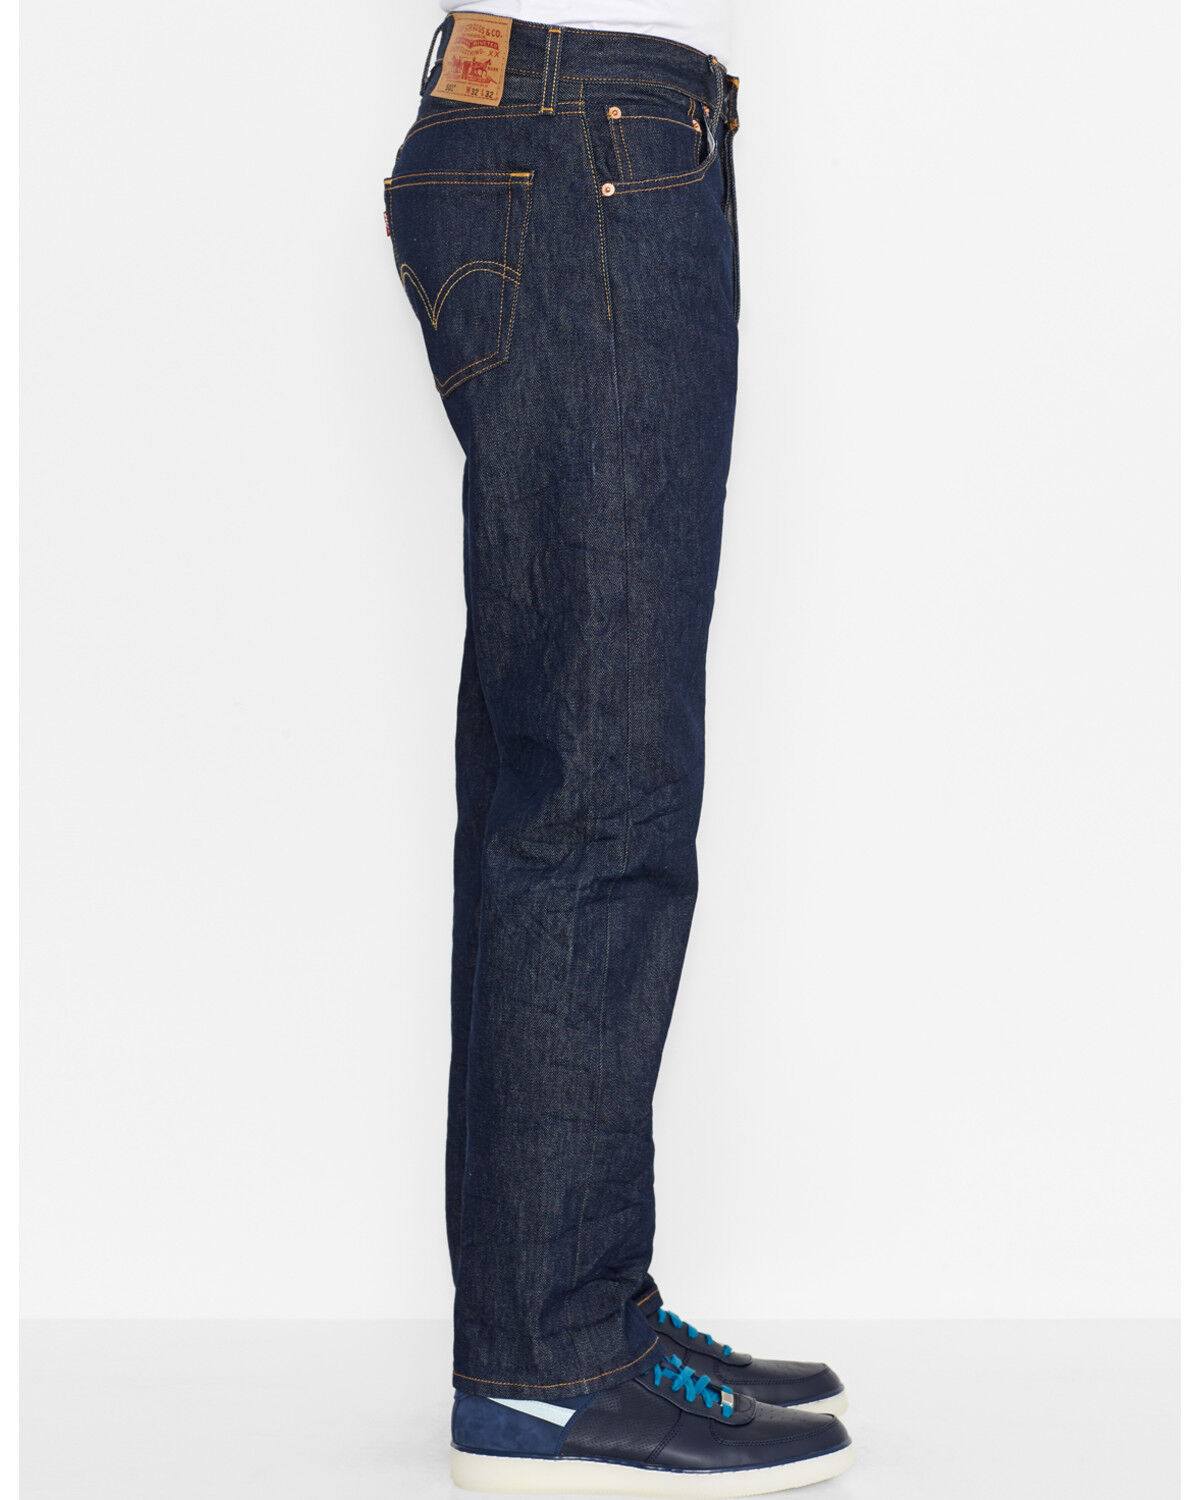 Levi's 501 Men’s Original Fit Straight Leg Jeans in Morning Roast NEW 38x30 